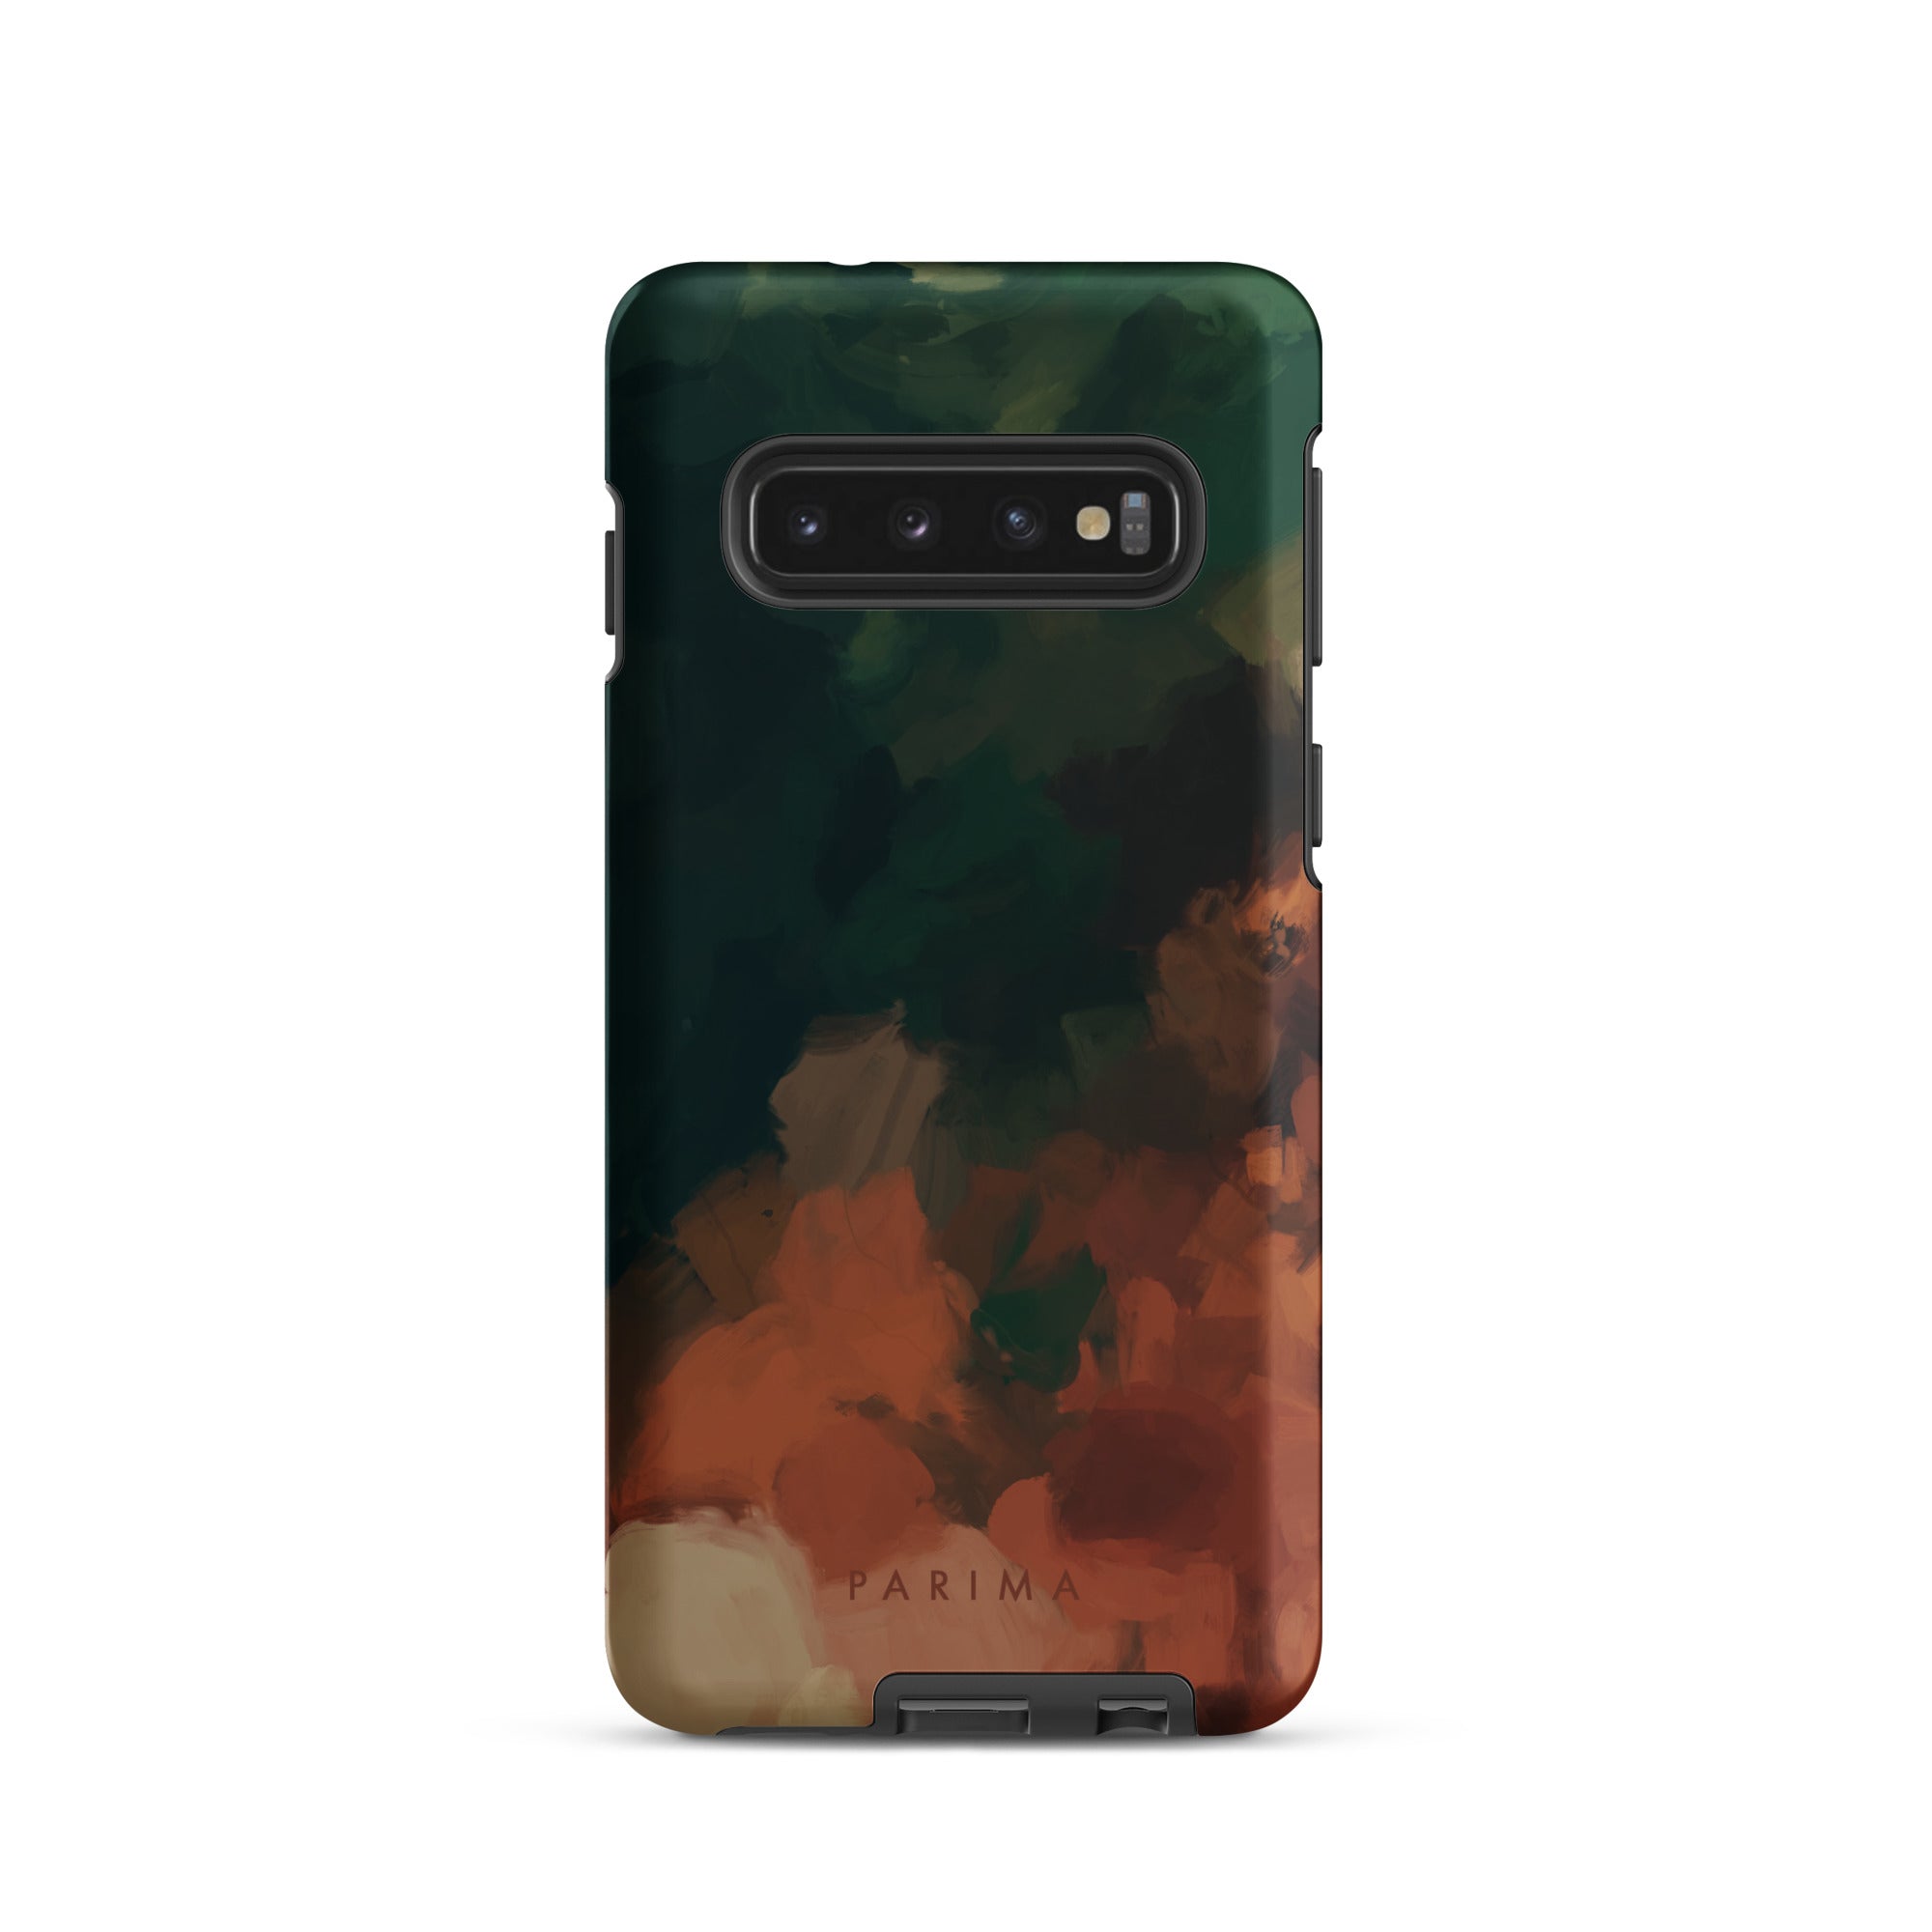 Cedar, green and brown abstract art on Samsung Galaxy S10 tough case by Parima Studio